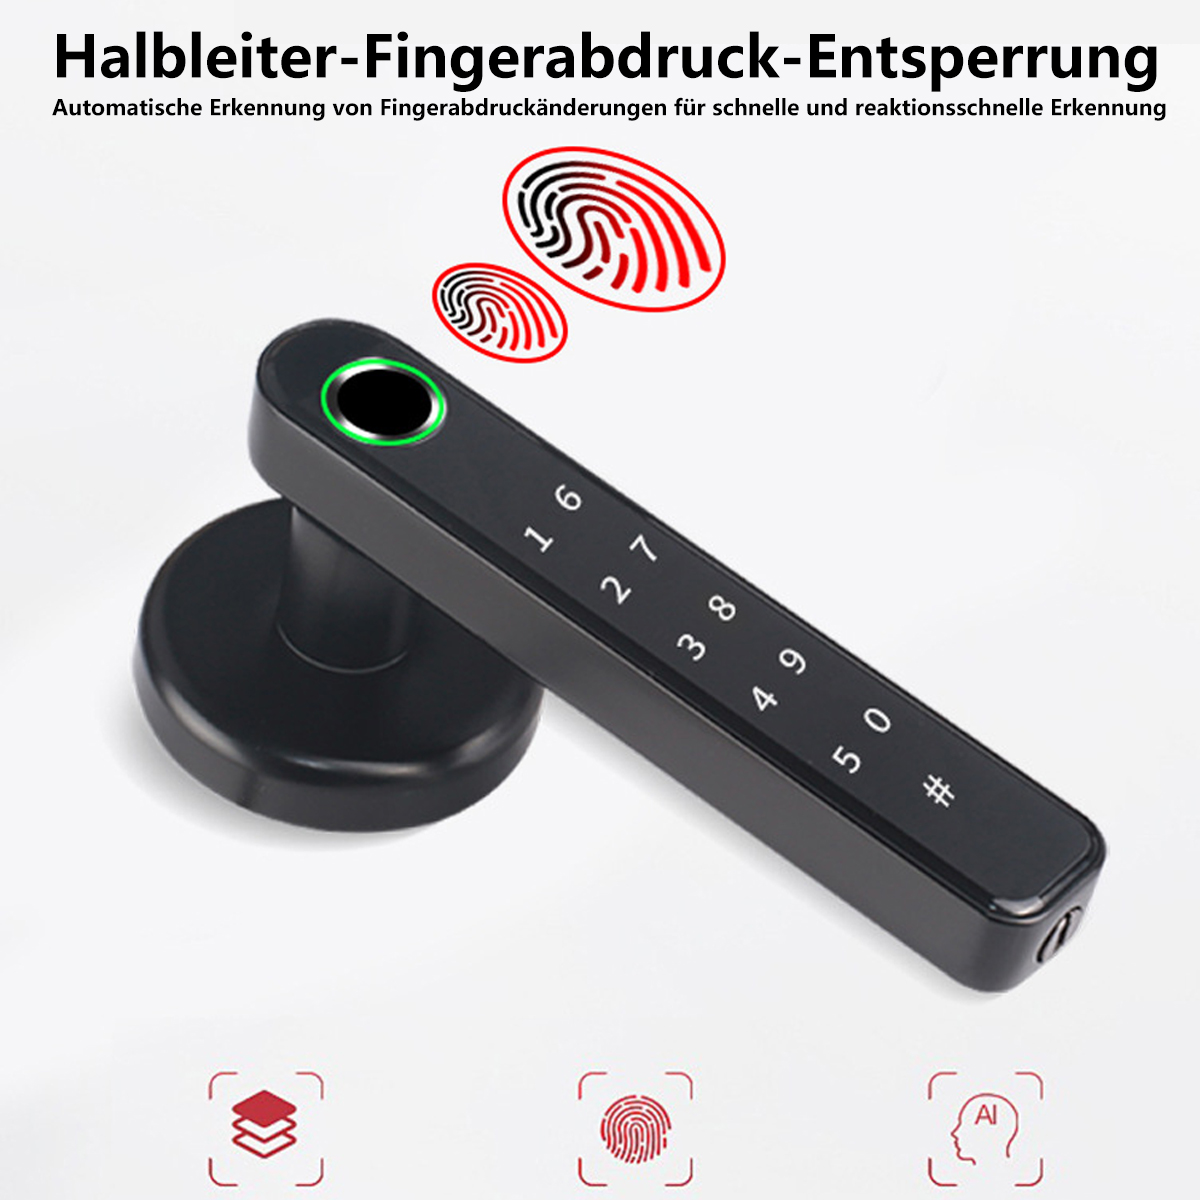 Einzeloperation, weiß Bluetooth Zimmertür Lock Unlock Handy Türschlösser, BYTELIKE Büro Fingerprint Türschloss Smarte Lock für Smart